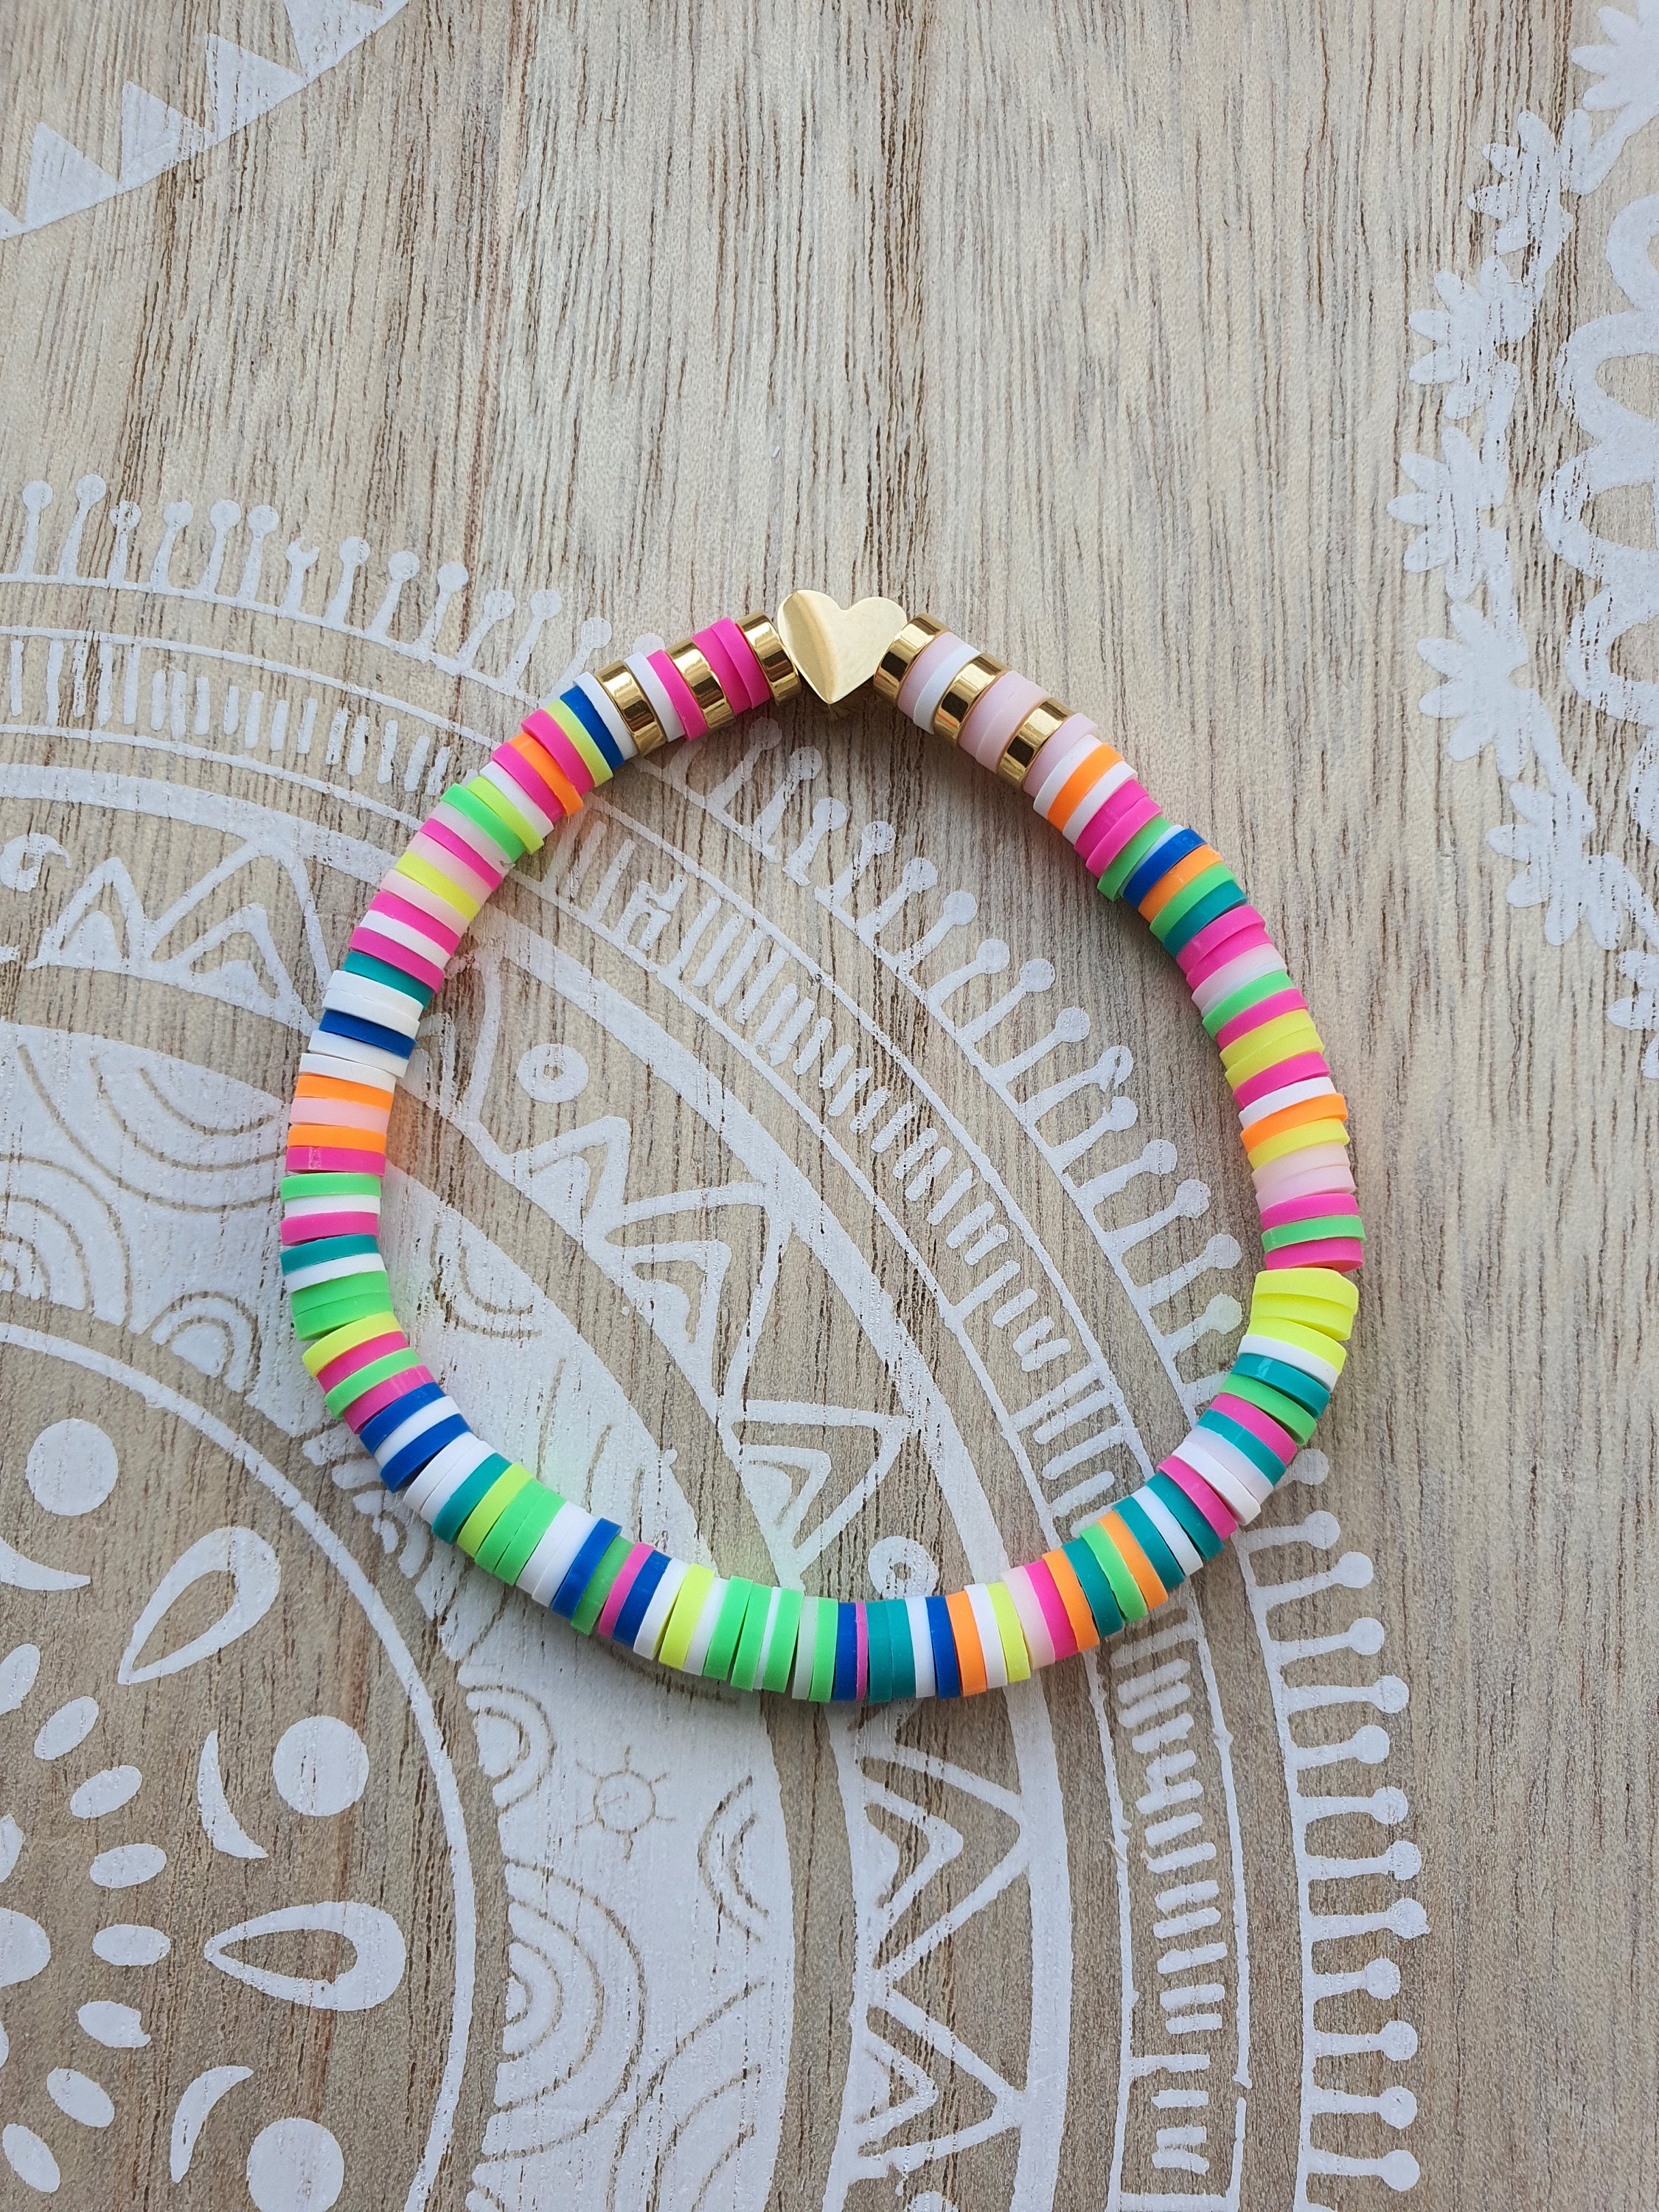 Boho Style Bead Bracelet Colorful Katsuki Beads Summer Summer Letters Pink  Gold Mandala Hippie Heishi 